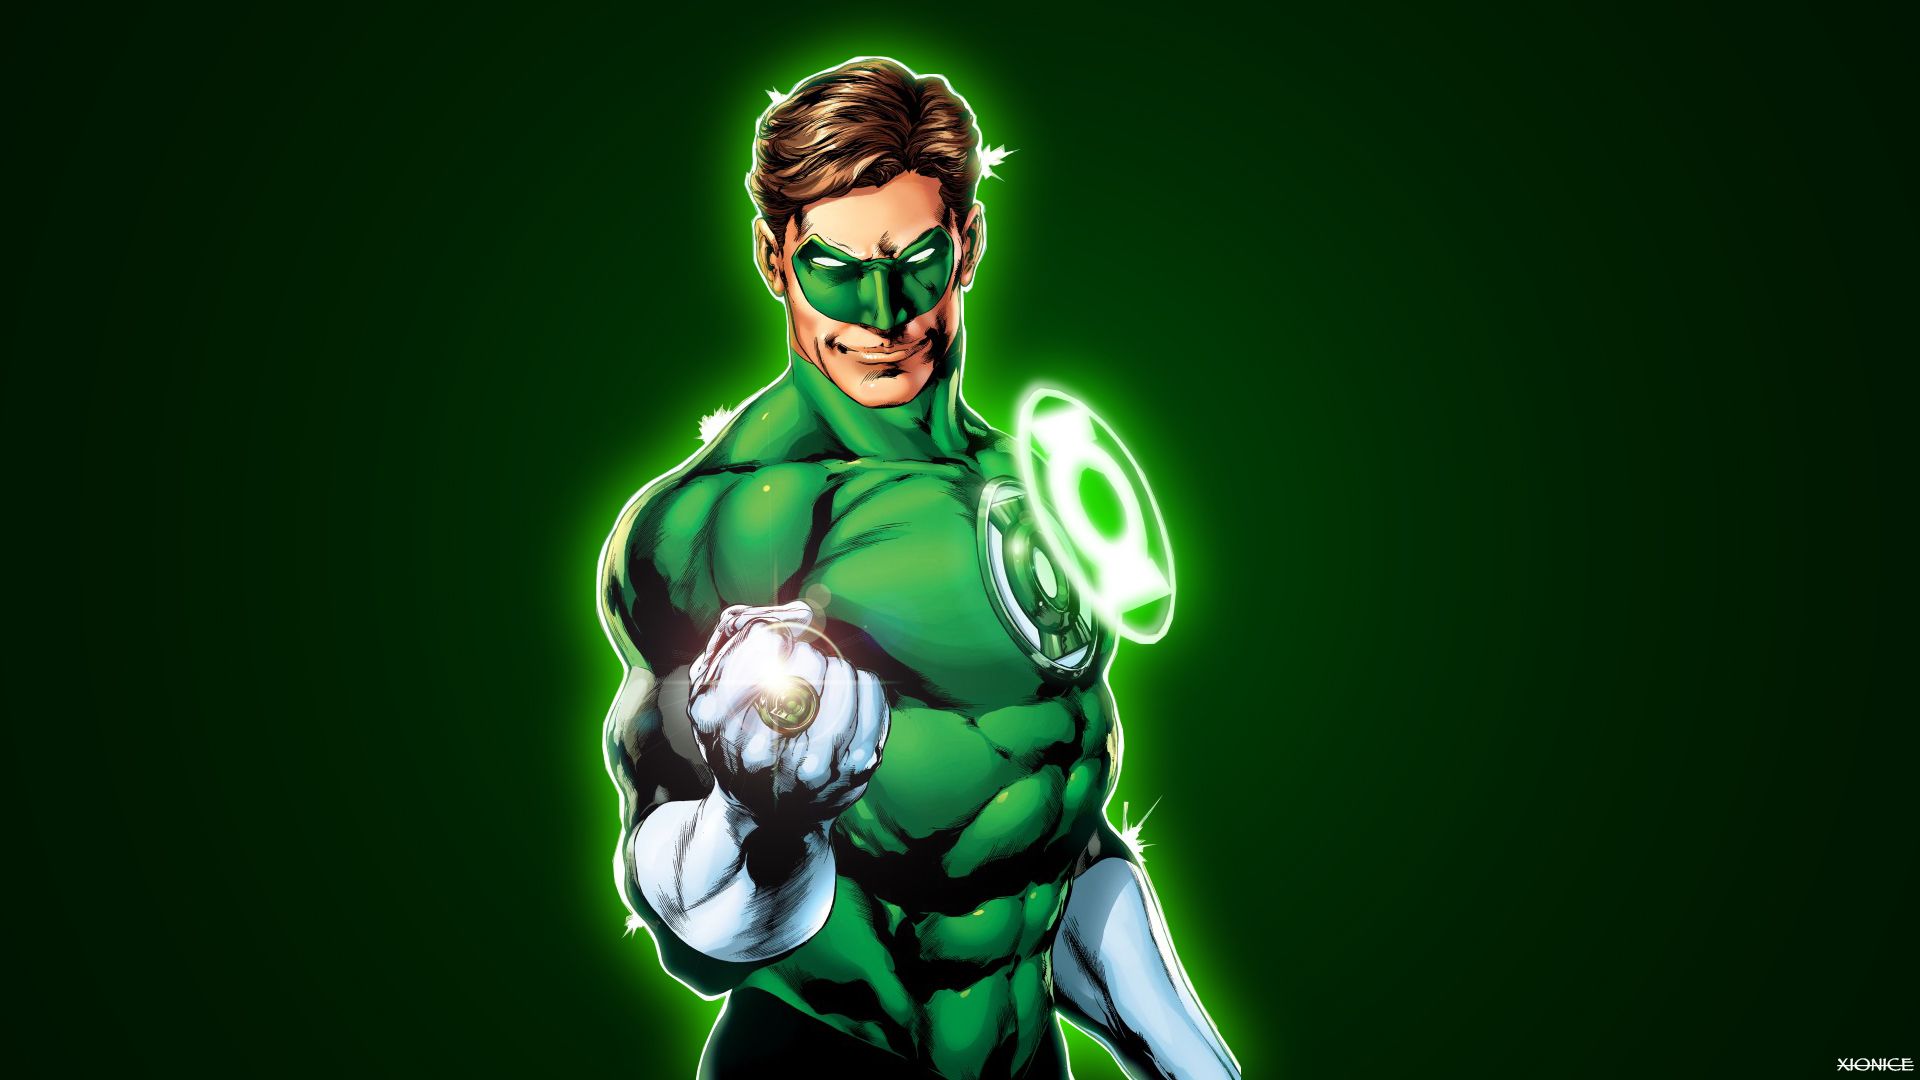 Green Lantern Hal Jordan Fictional Superhero Created In 1959 By Writer John Broome And Artist Gill Kane Dc Comics Wallpaper HD 1920x1080, Wallpaper13.com